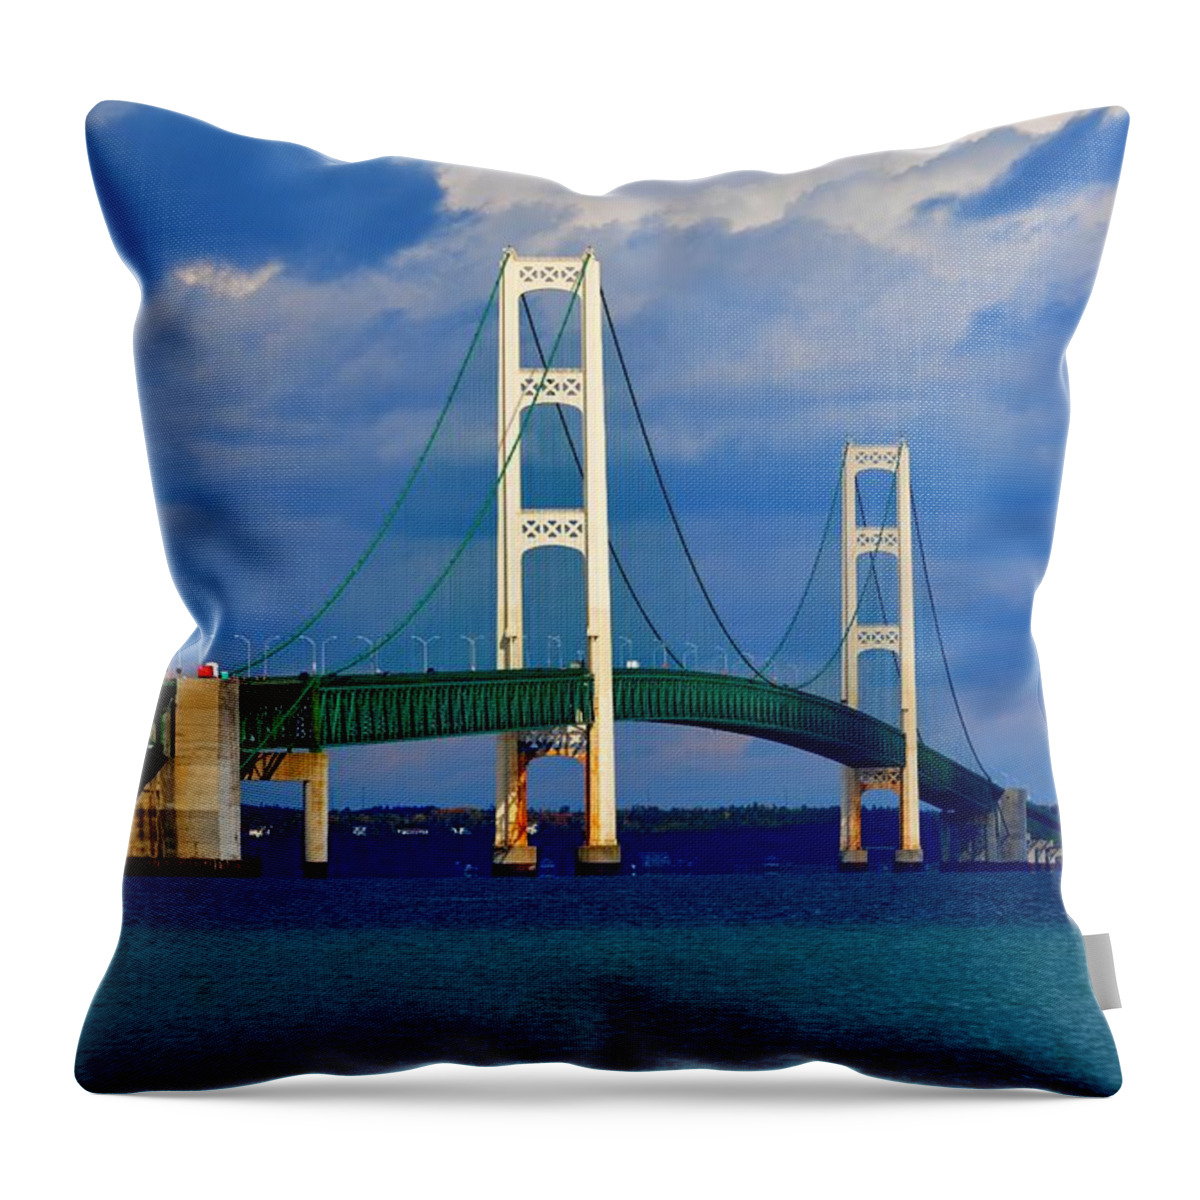 Michigan Throw Pillow featuring the photograph October Sky Mackinac Bridge by Keith Stokes